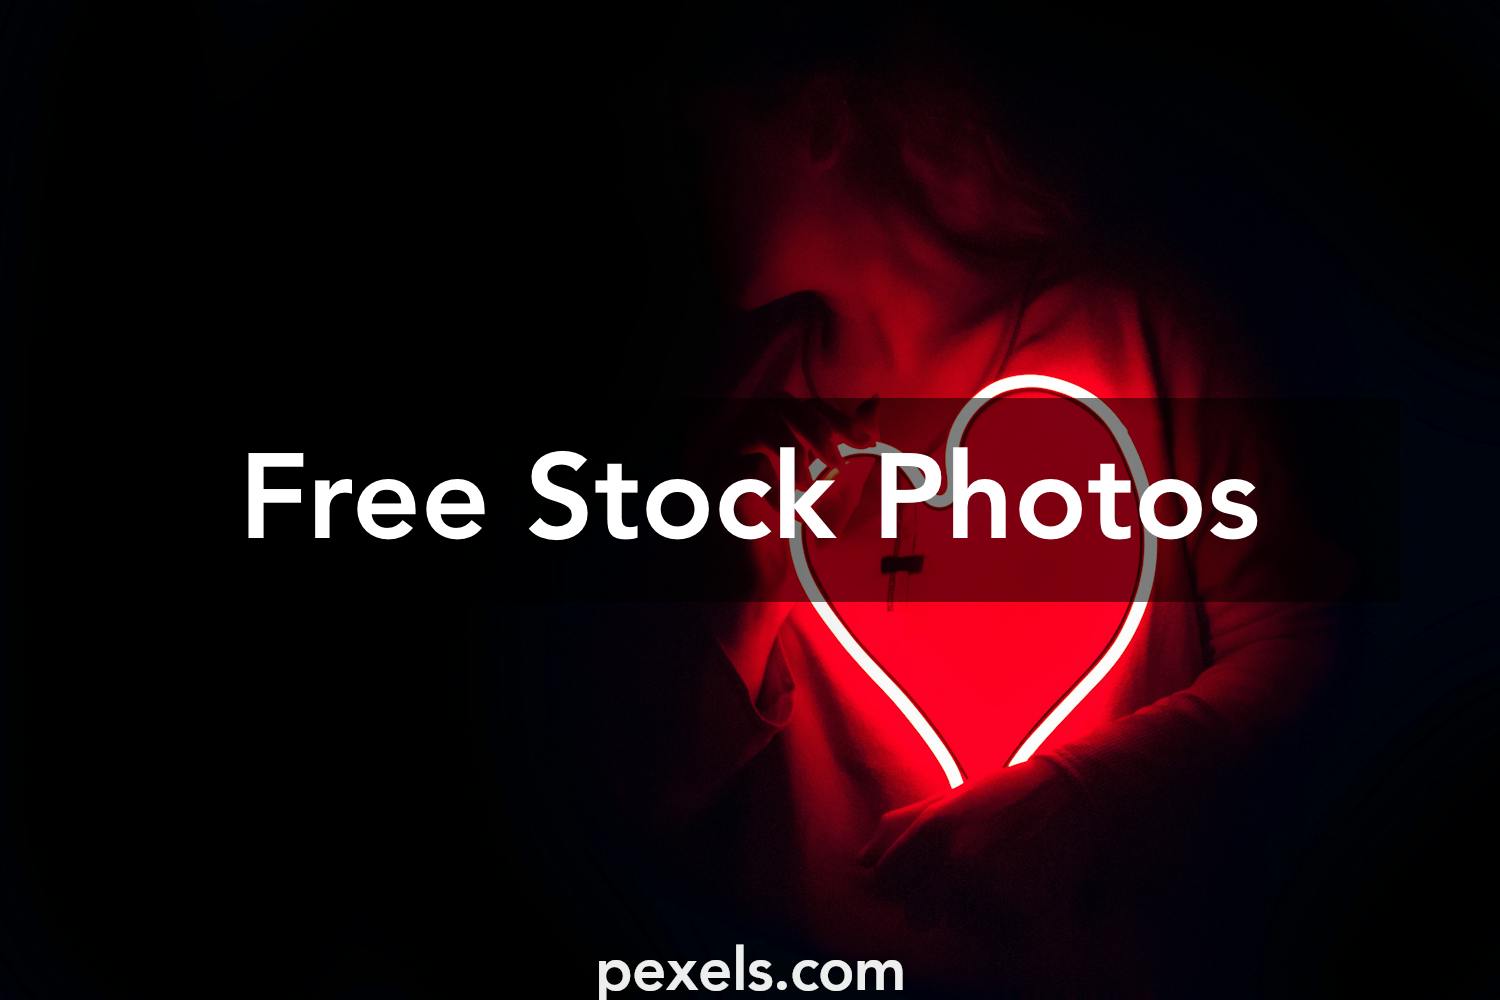 1000 Great Love Symbol Photos Pexels Free Stock Photos